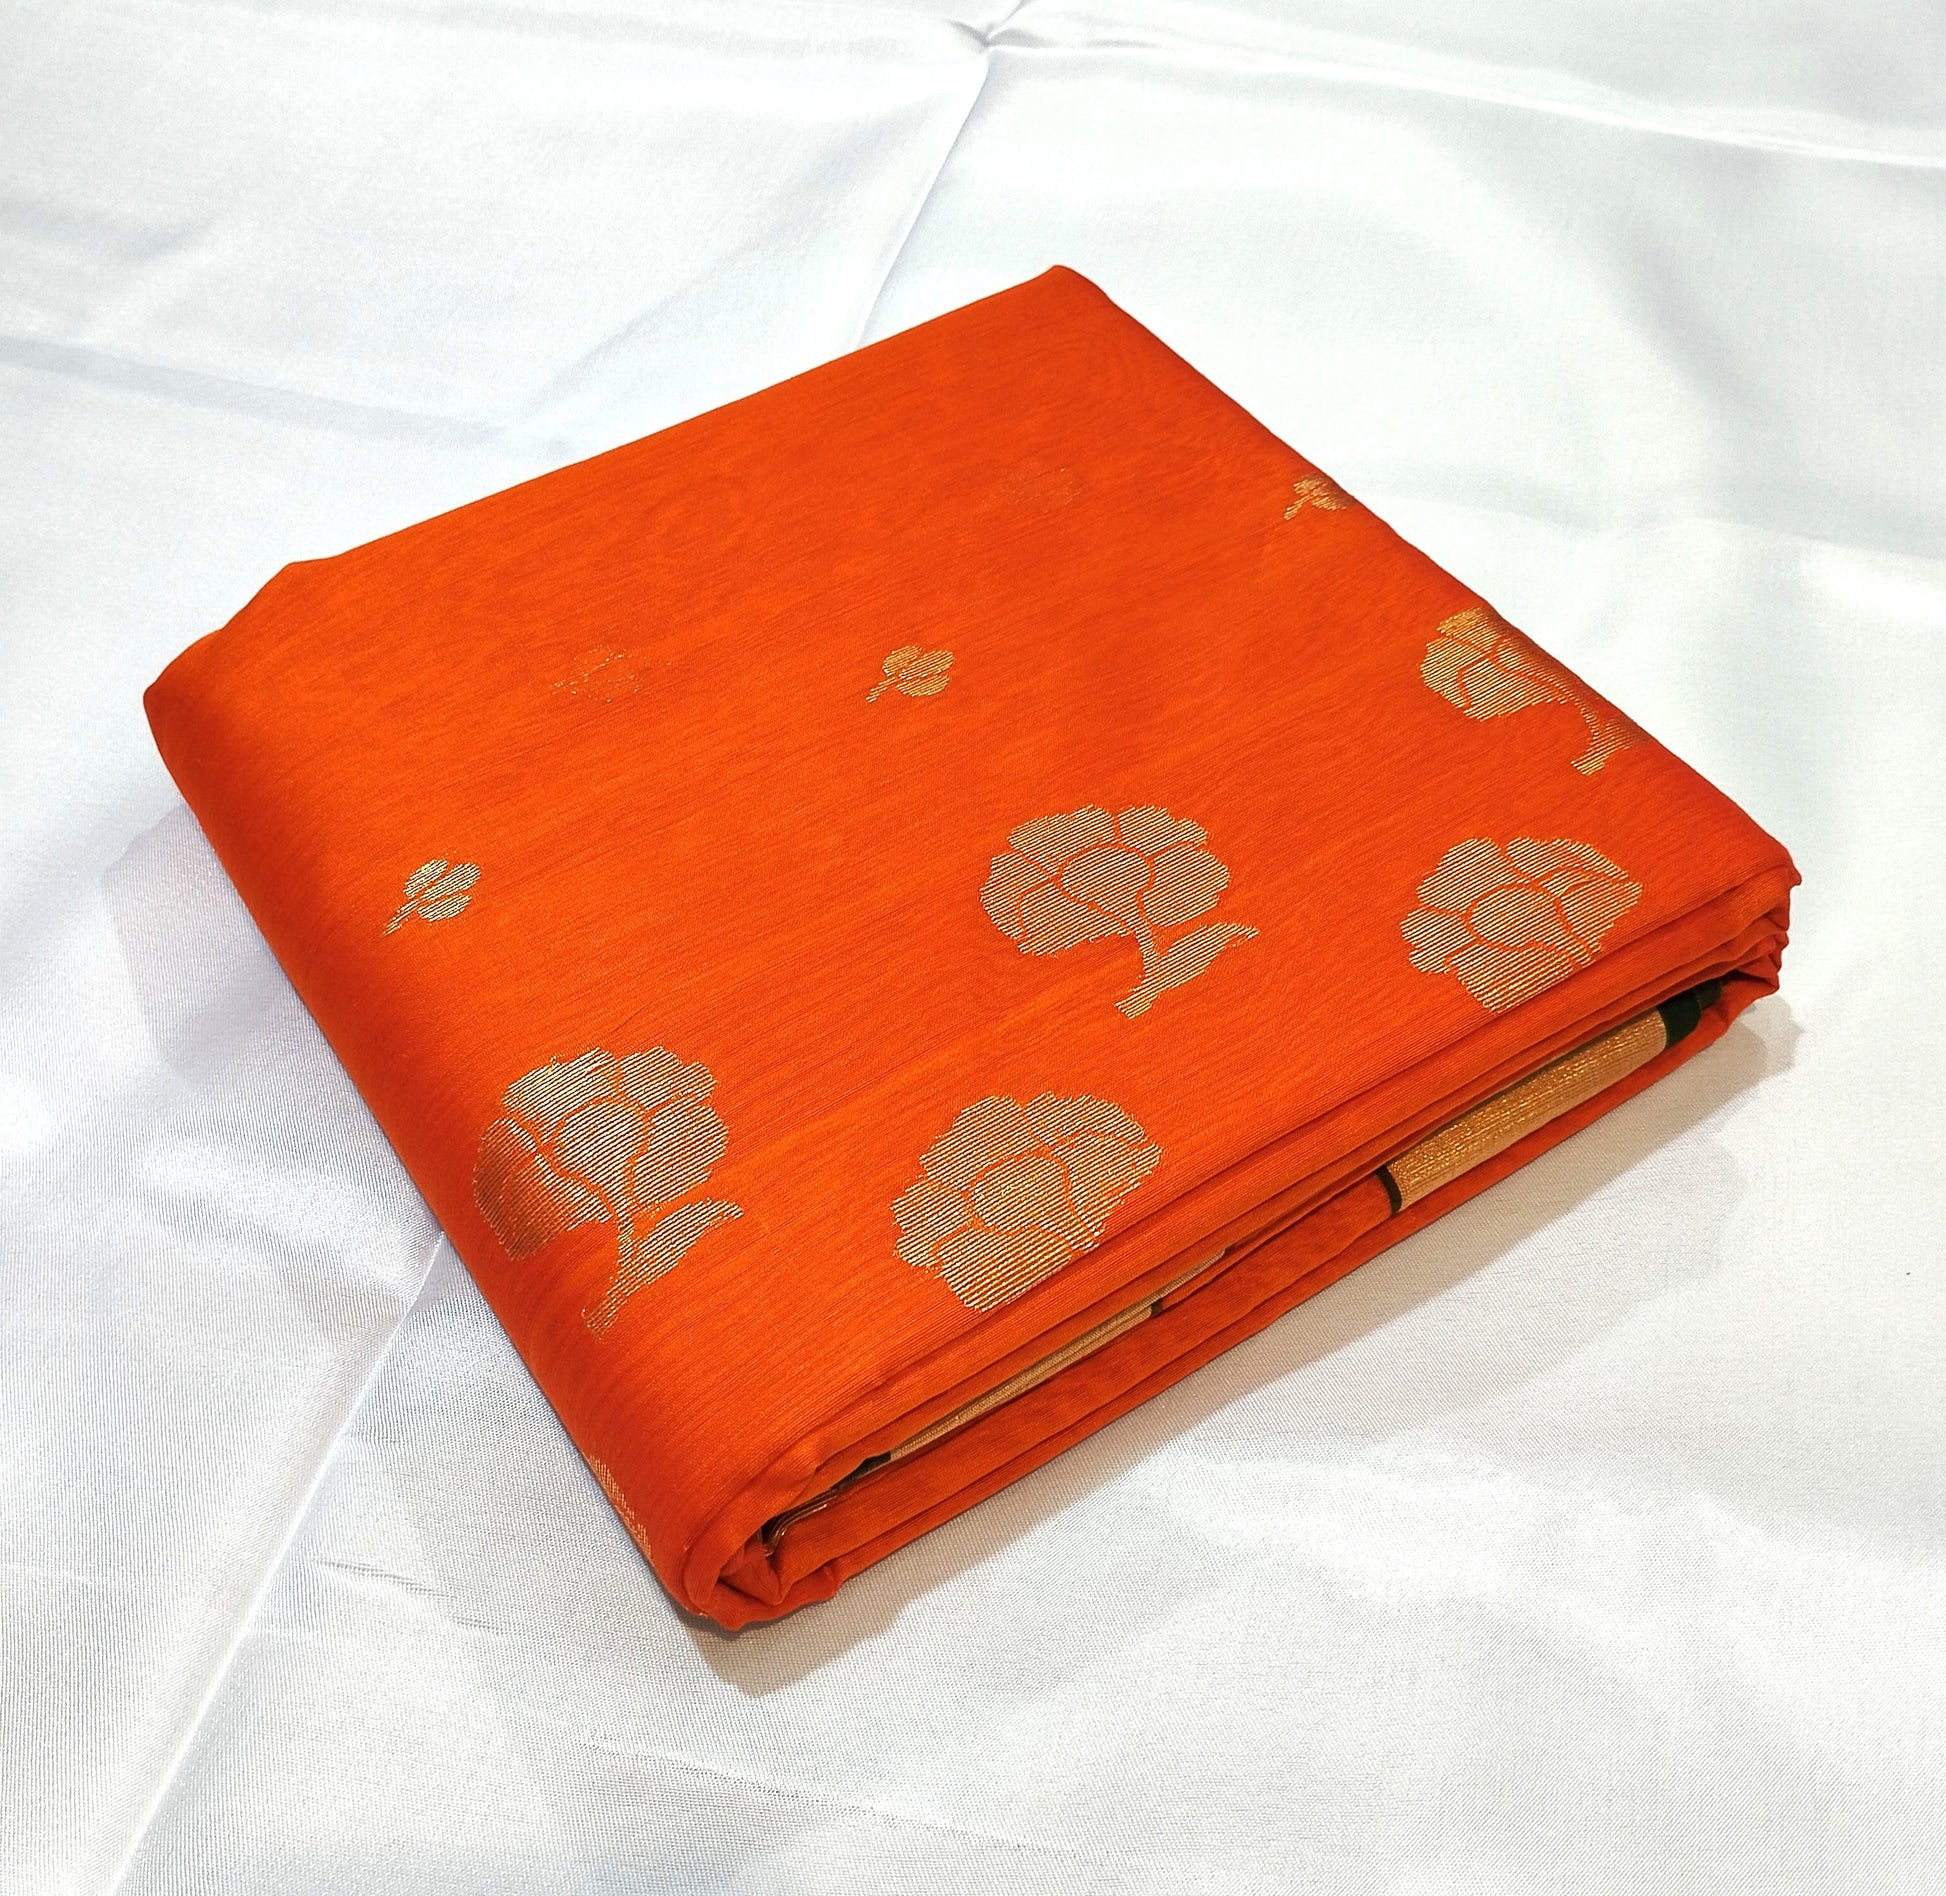 Chanderi Silk Cotton Orange colour saree - Artsy India